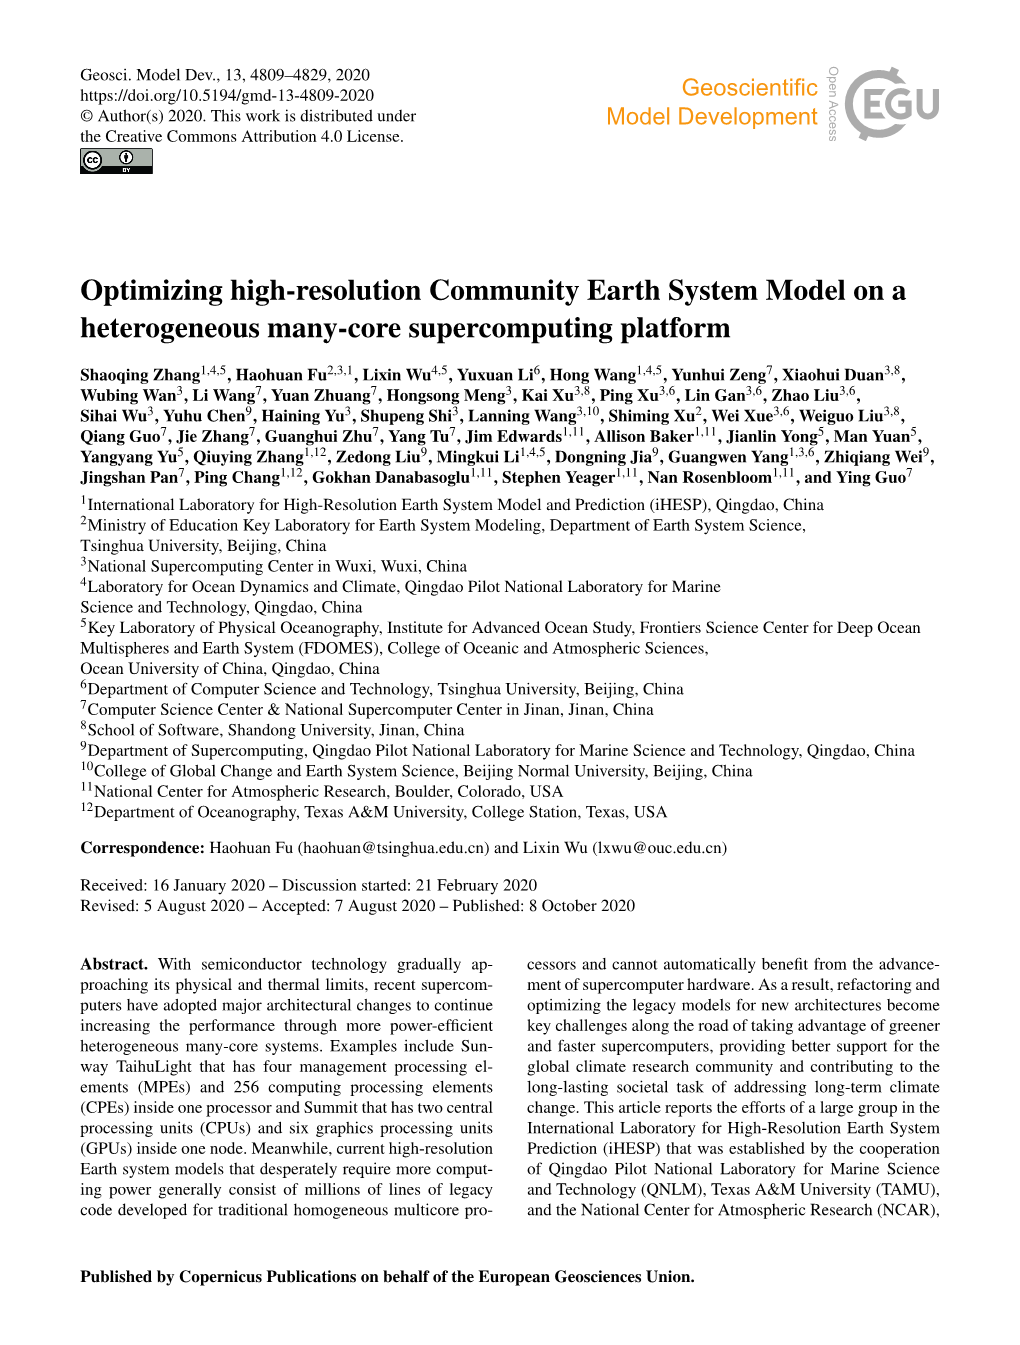 Optimizing High-Resolution Community Earth System Model on a Heterogeneous Many-Core Supercomputing Platform